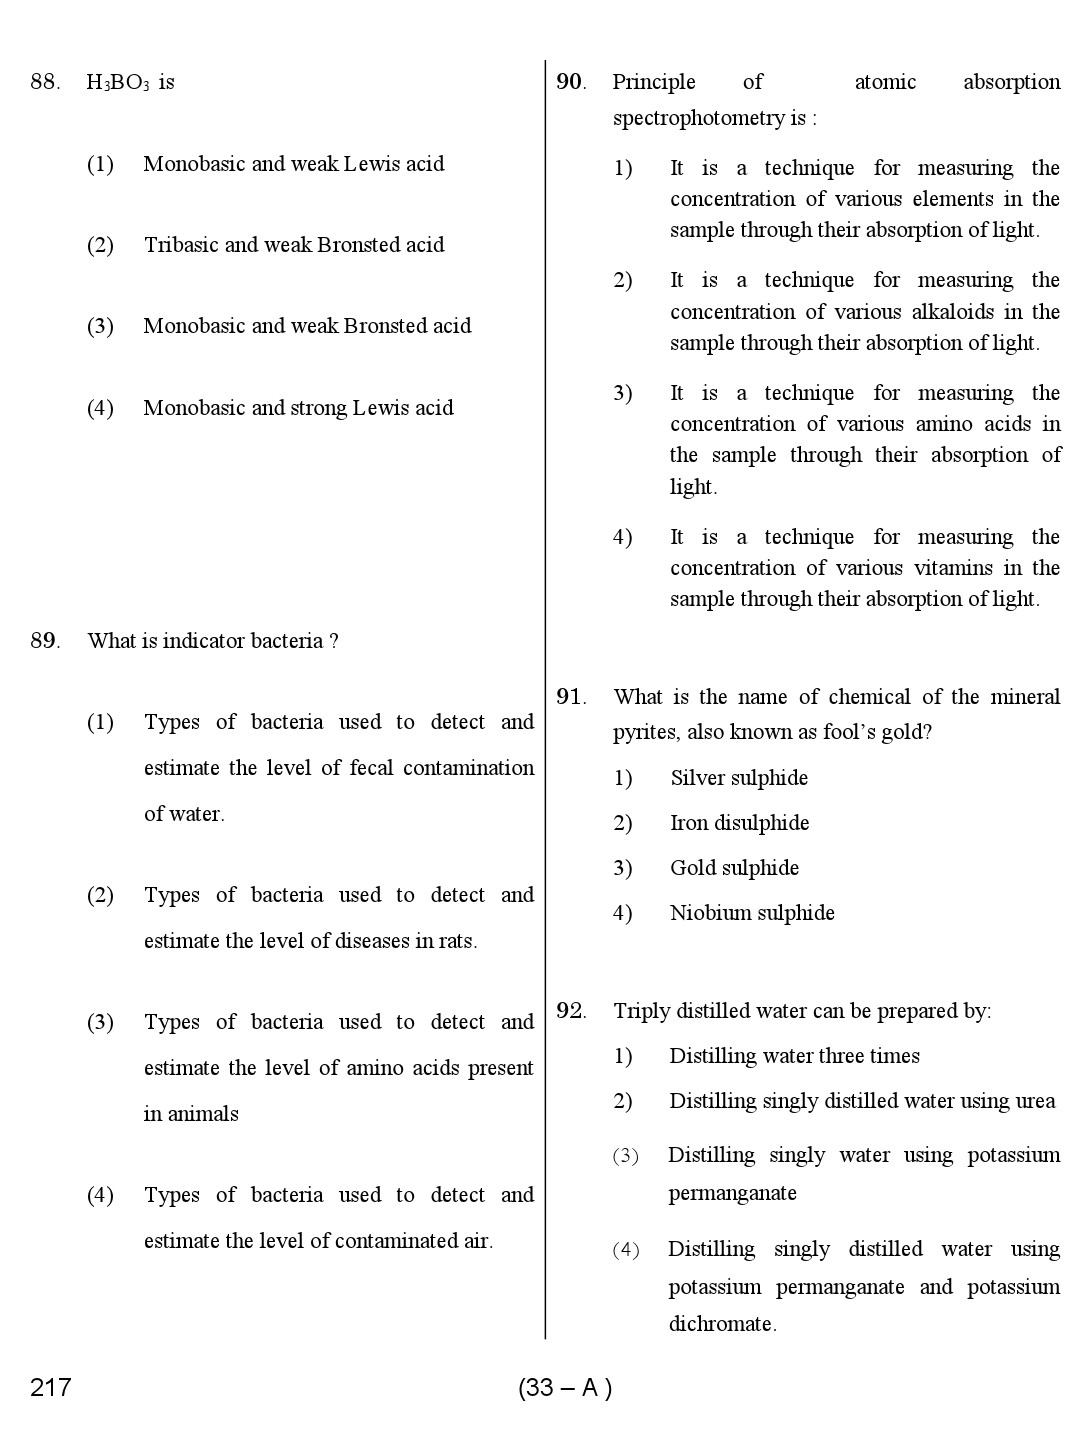 Karnataka PSC Chemist Exam Sample Question Paper 33